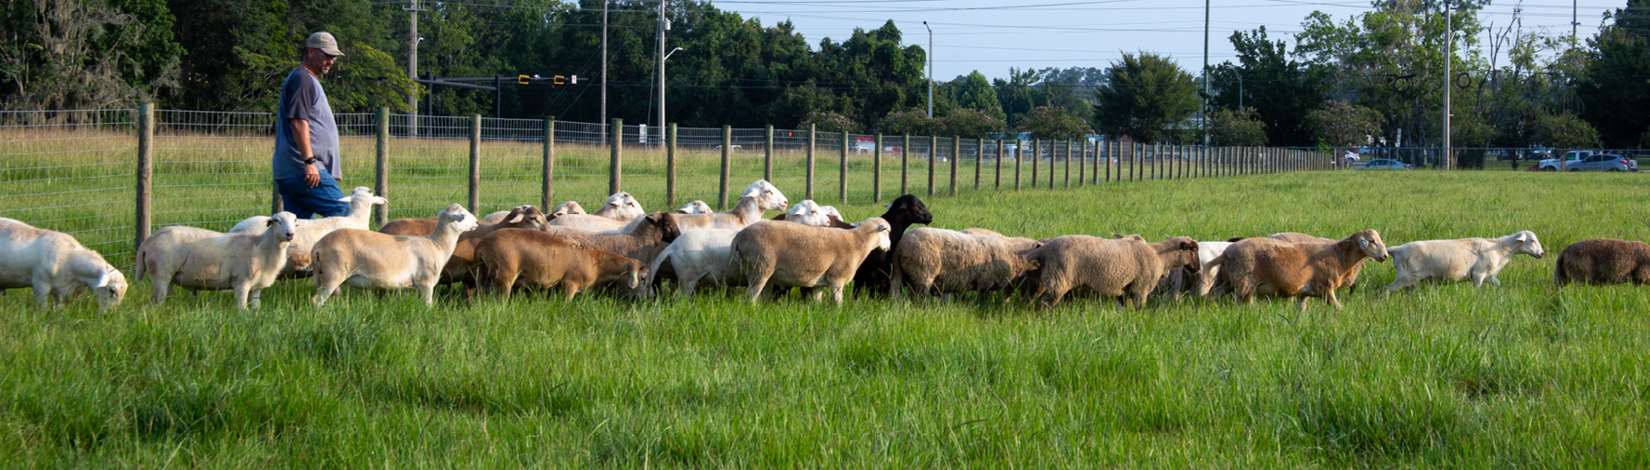 Man herding flock of sheep in green pasture